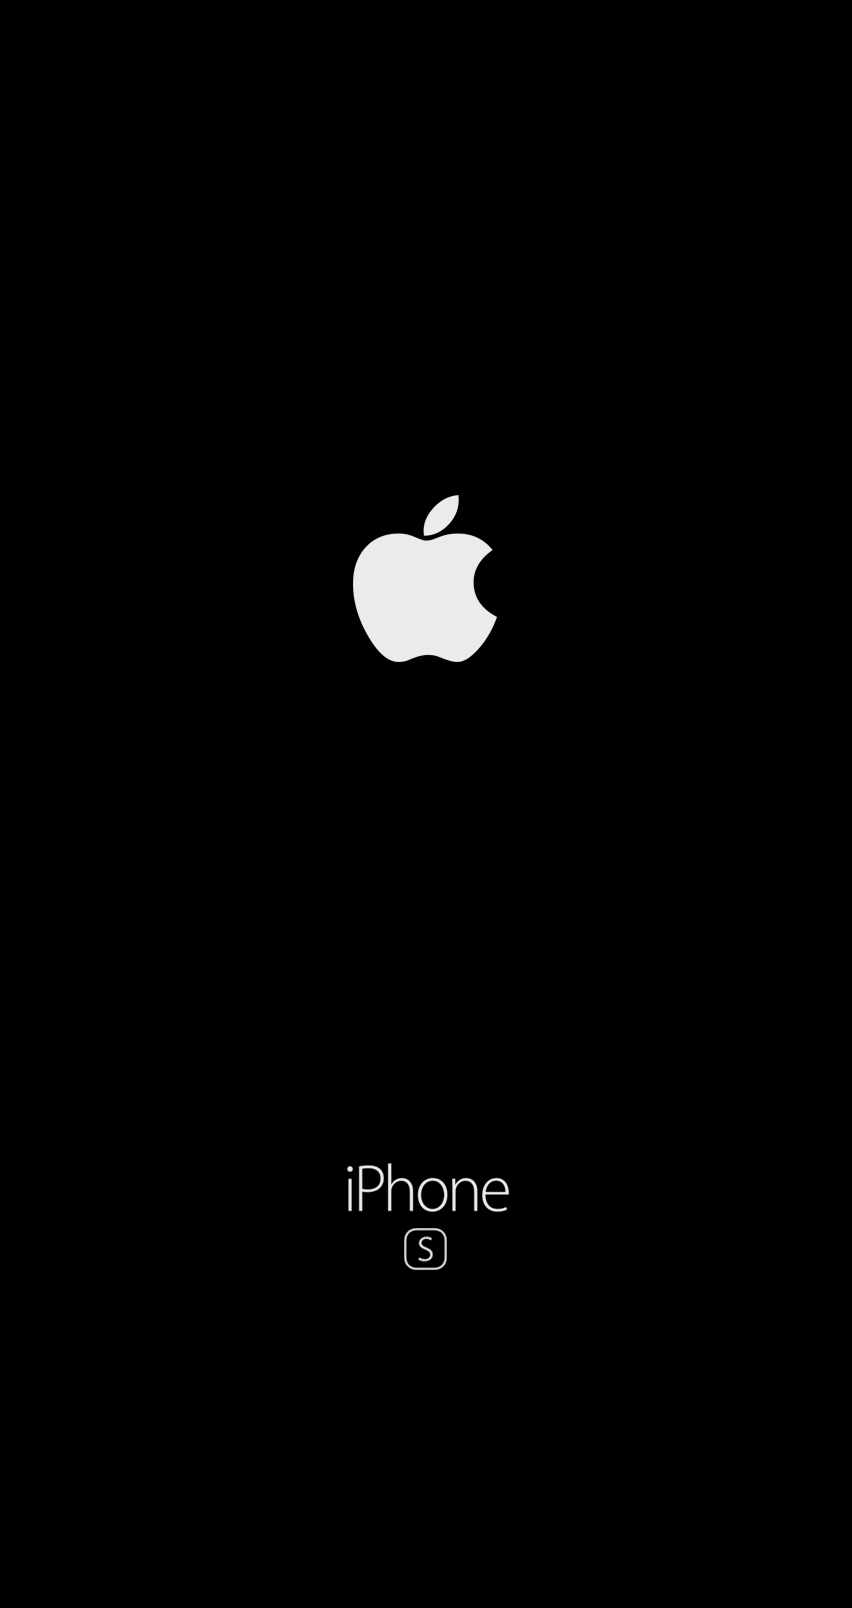 6s Logo - iPhone 6s Wallpaper black logo apple fond d'écran noir